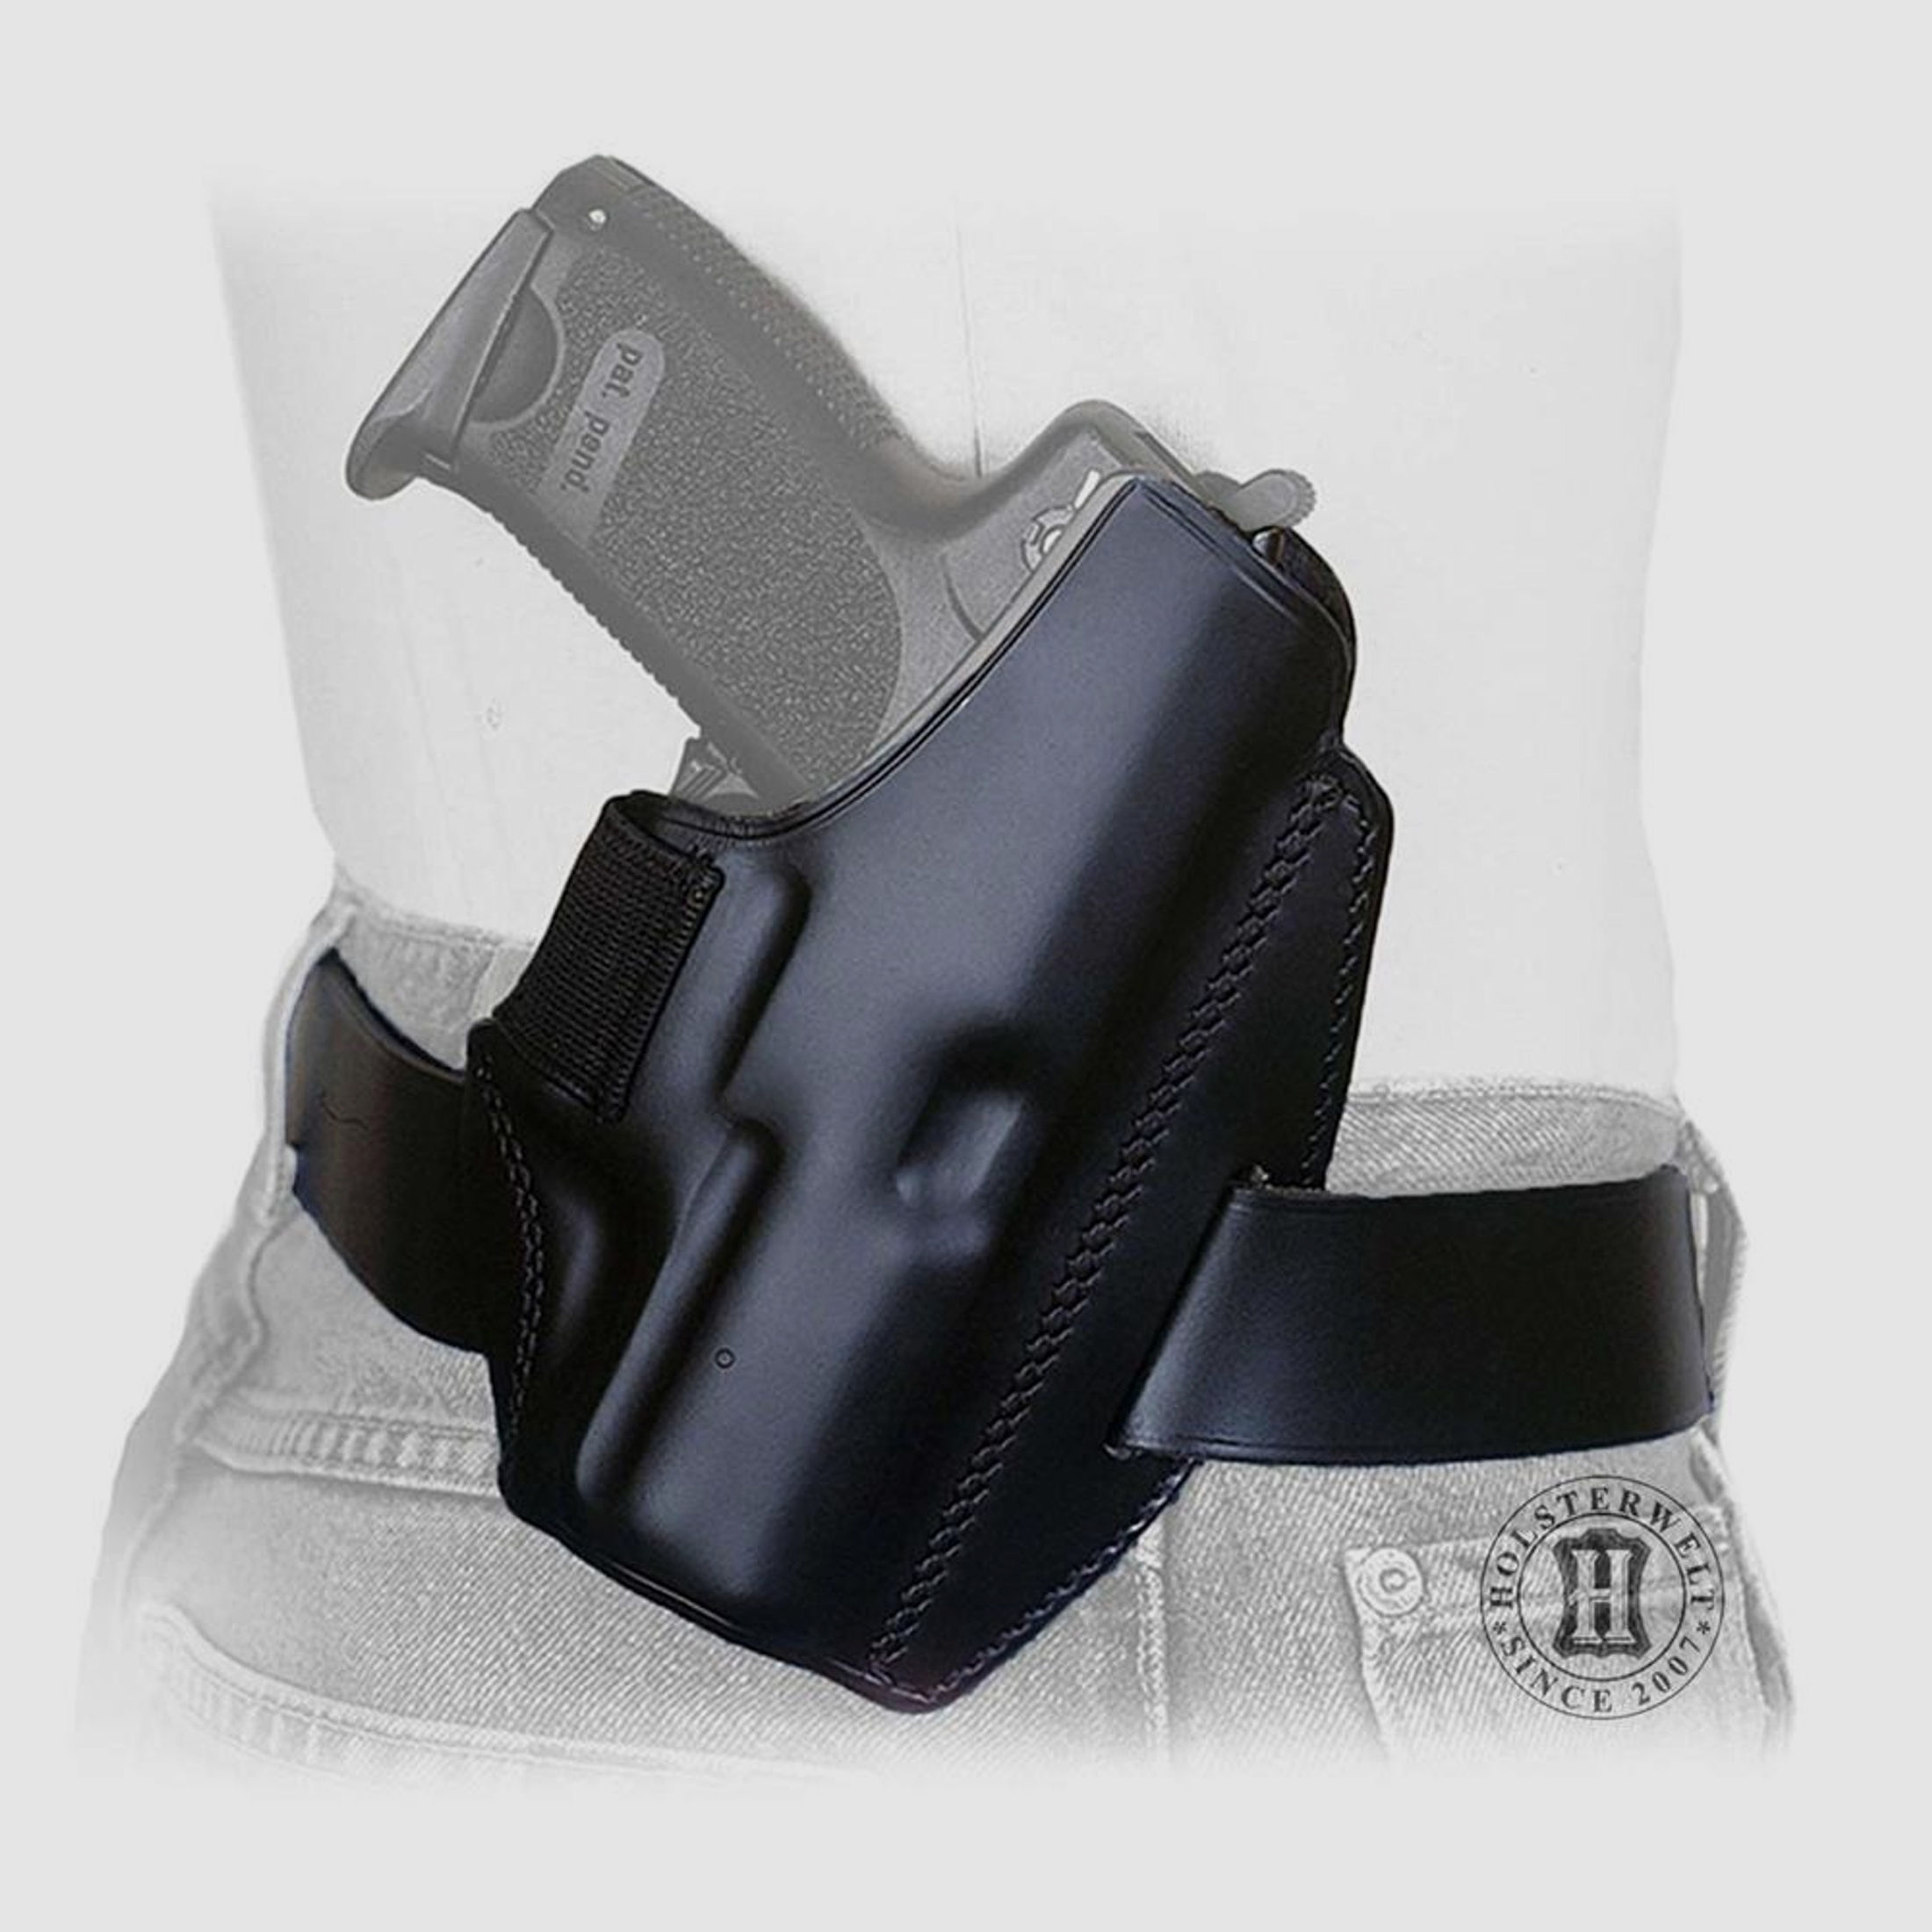 Gürtelholster QUICK DEFENSE Sig Sauer P220/P226 X FIVE Linkshänder